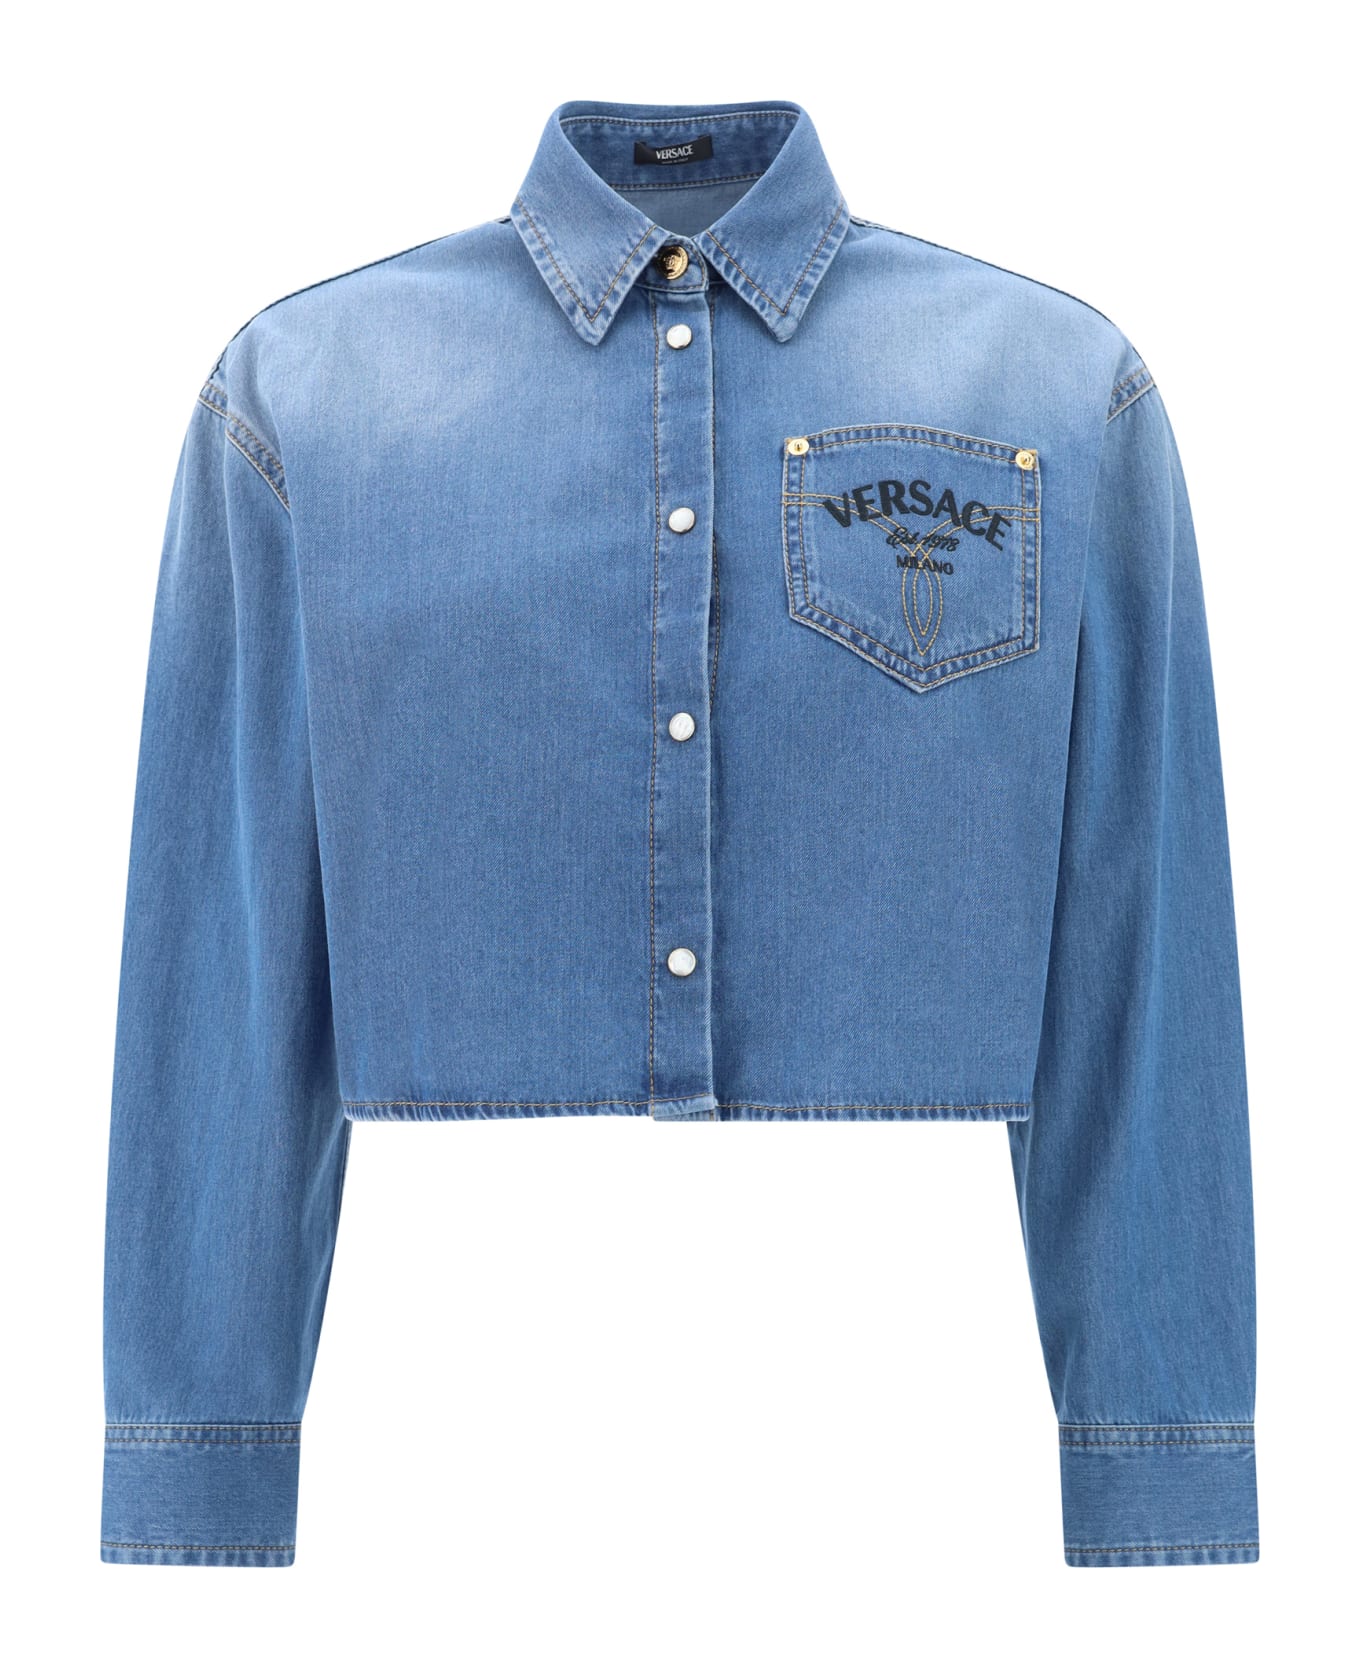 Versace Denim Shirt - Medium Blue